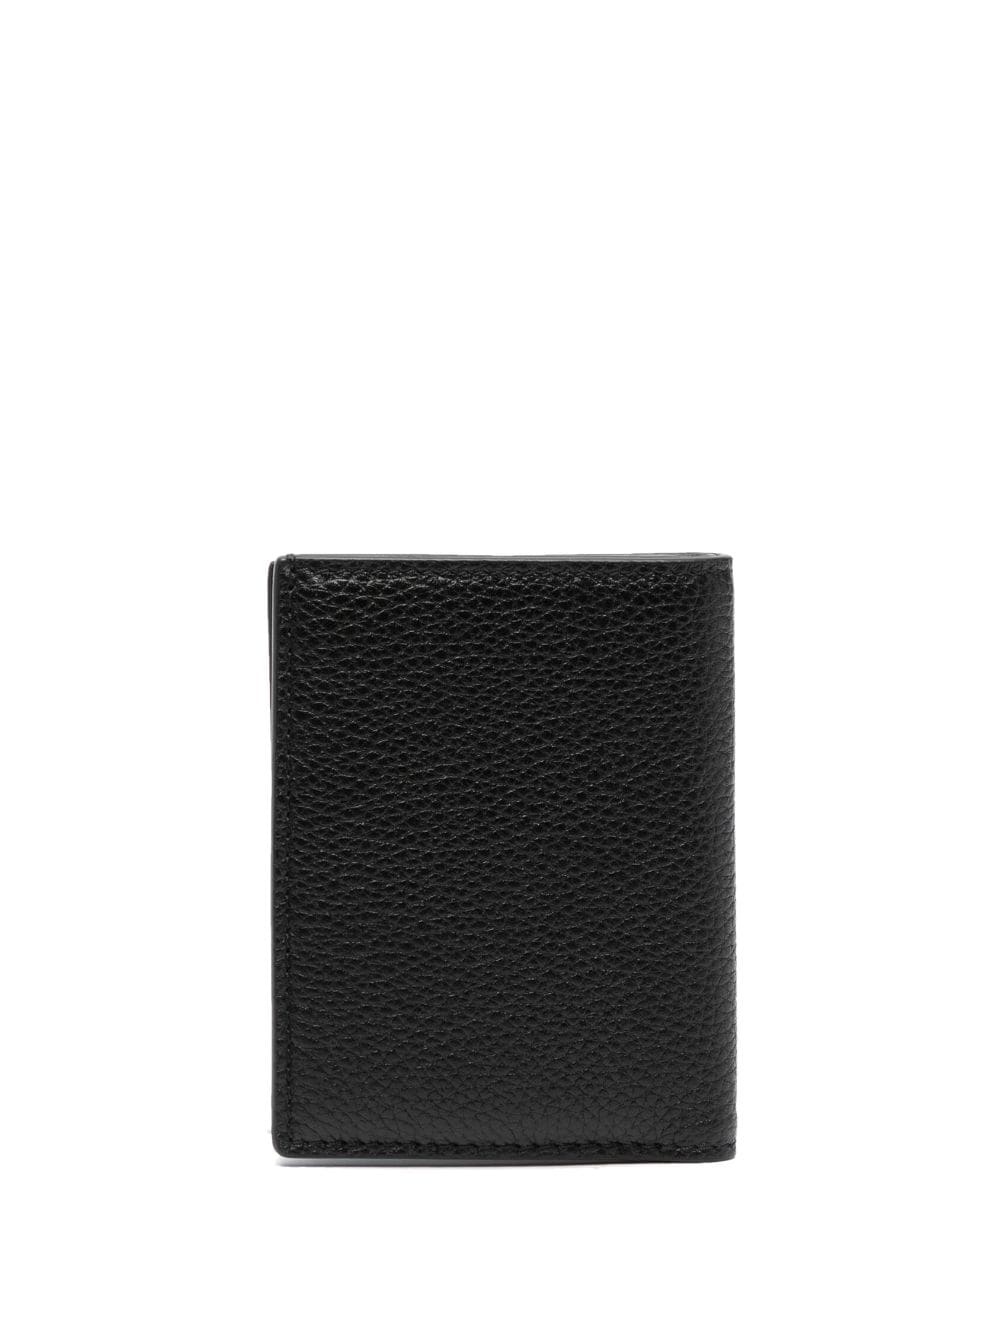 logo-plaque leather wallet - 2